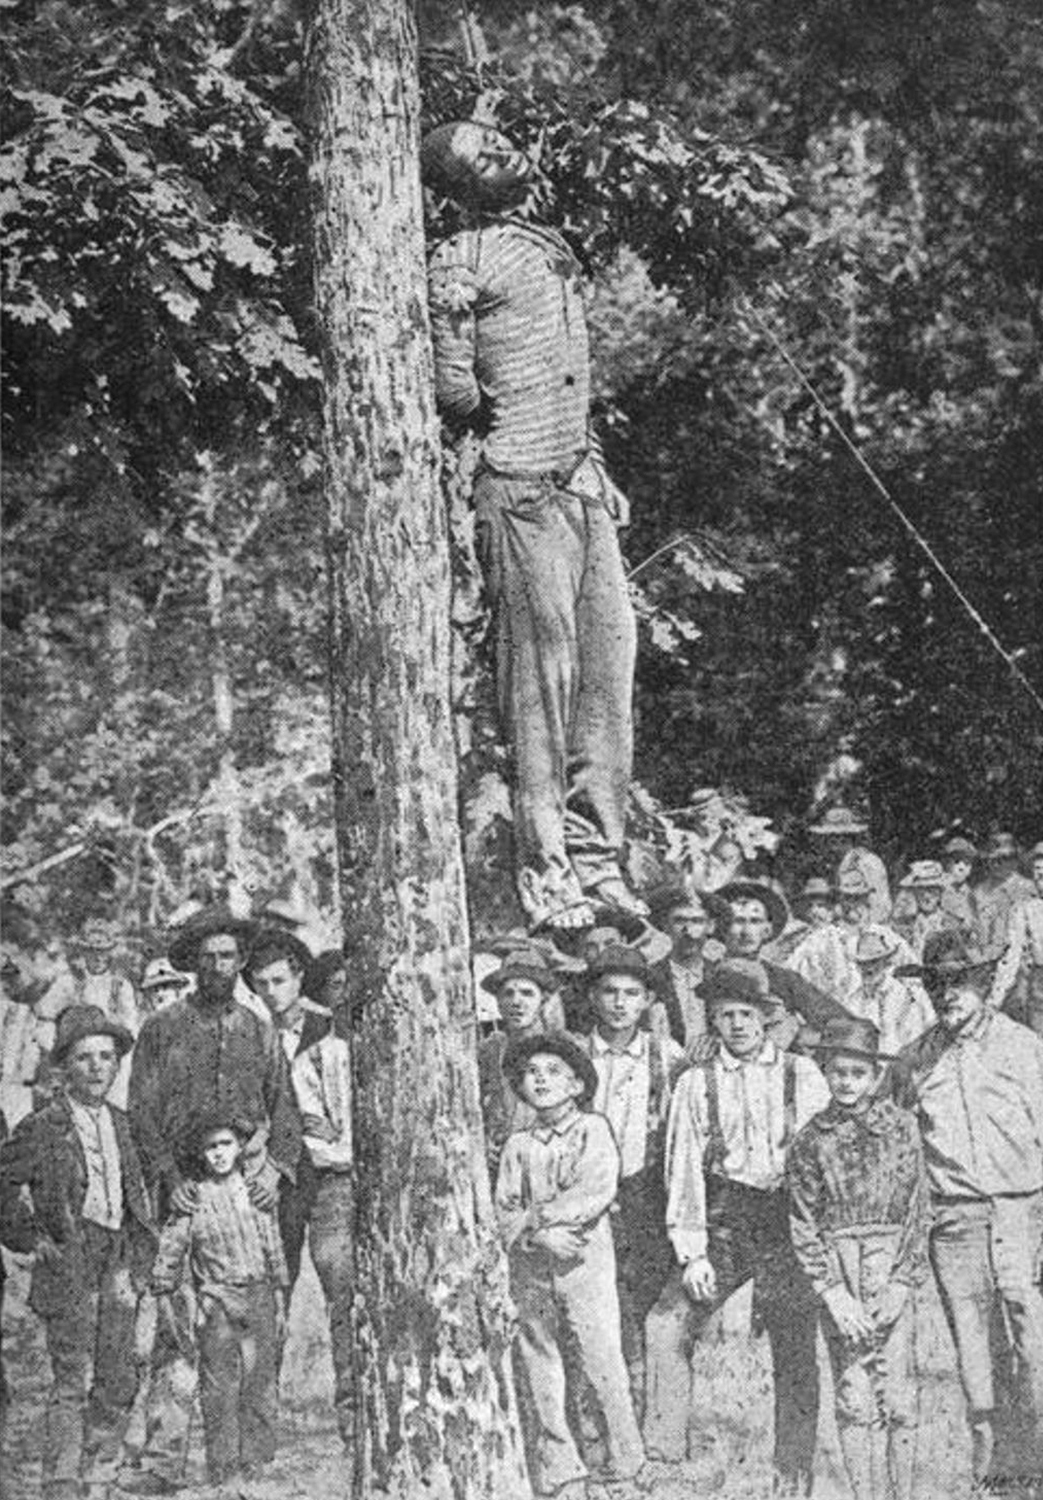 White children and parents gathered around a hanged Black man